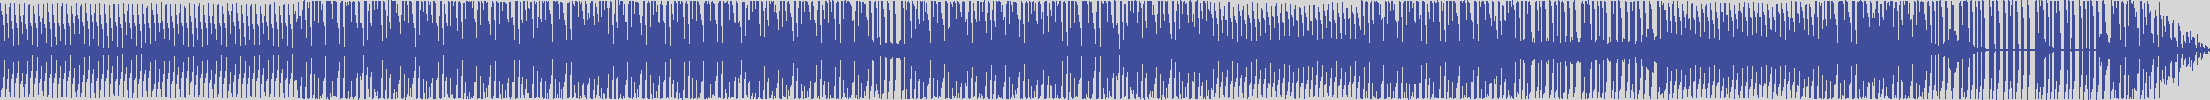 noclouds_chillout [NOC106] Noyz Emperor - Off [Original Mix] audio wave form